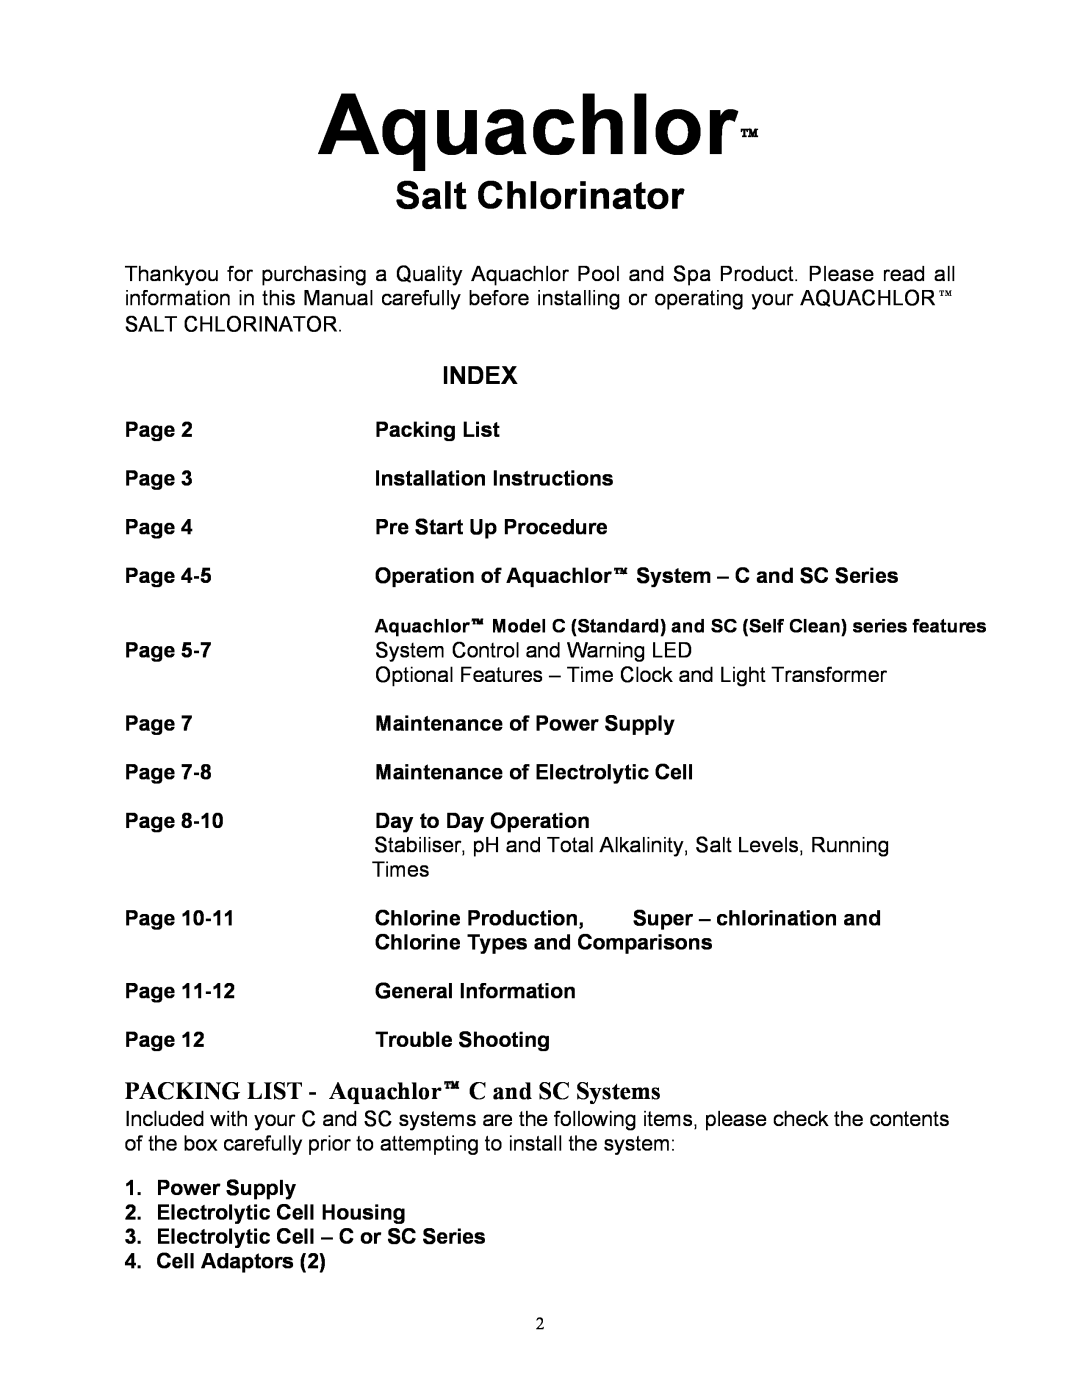 Mio STANDARD Salt Chlorinator, Index, Page, Packing List, Installation Instructions, Pre Start Up Procedure, Times 